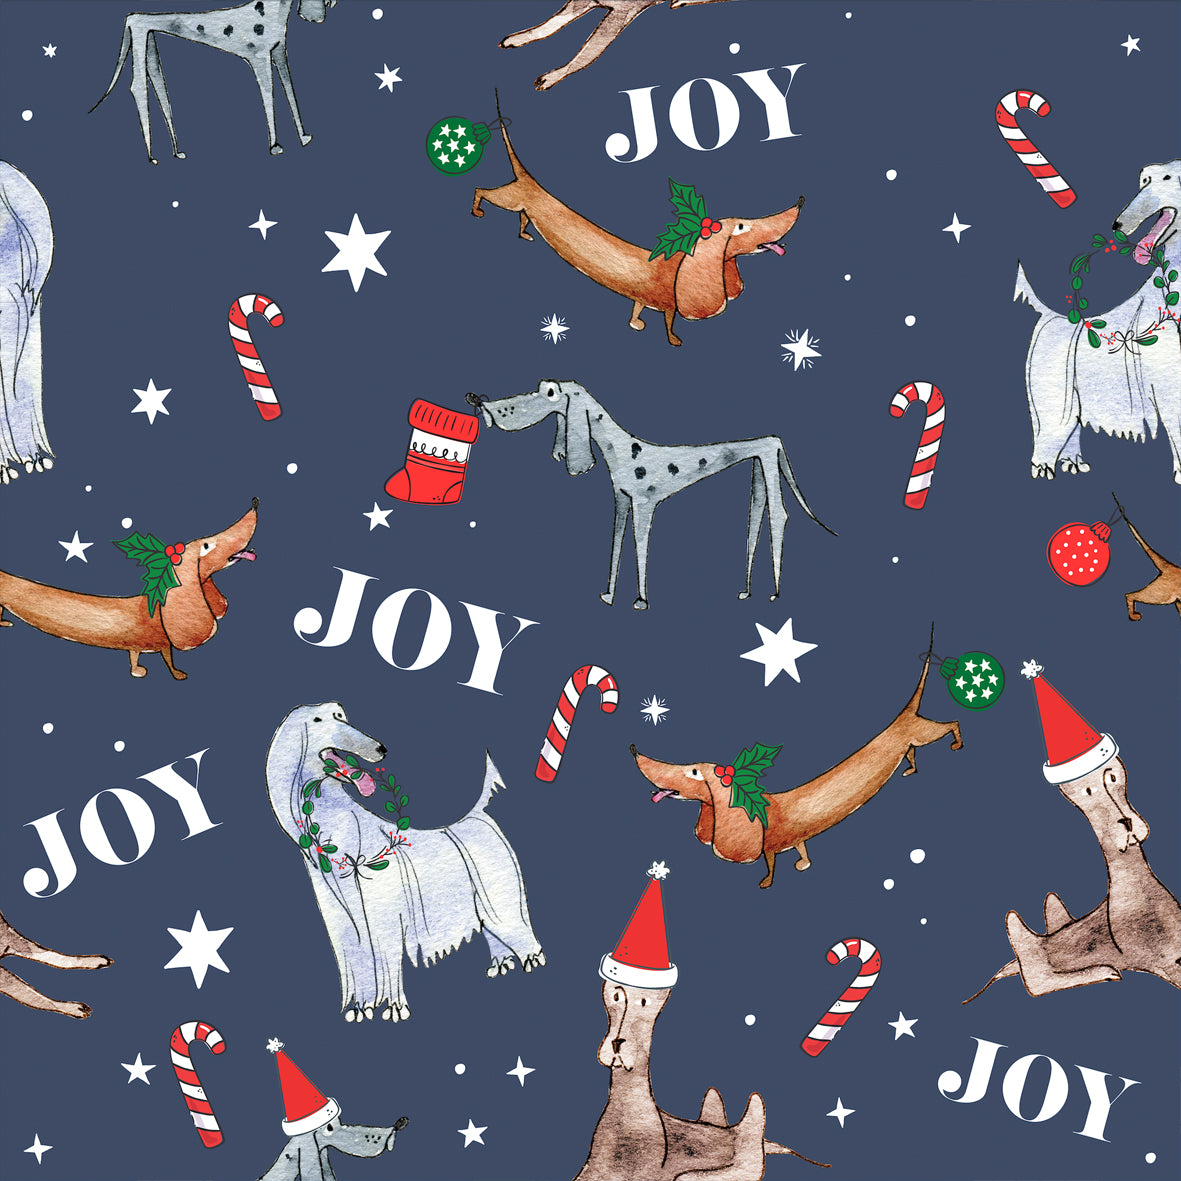 Smilewear Christmas Scrub Top - Joy (Navy)